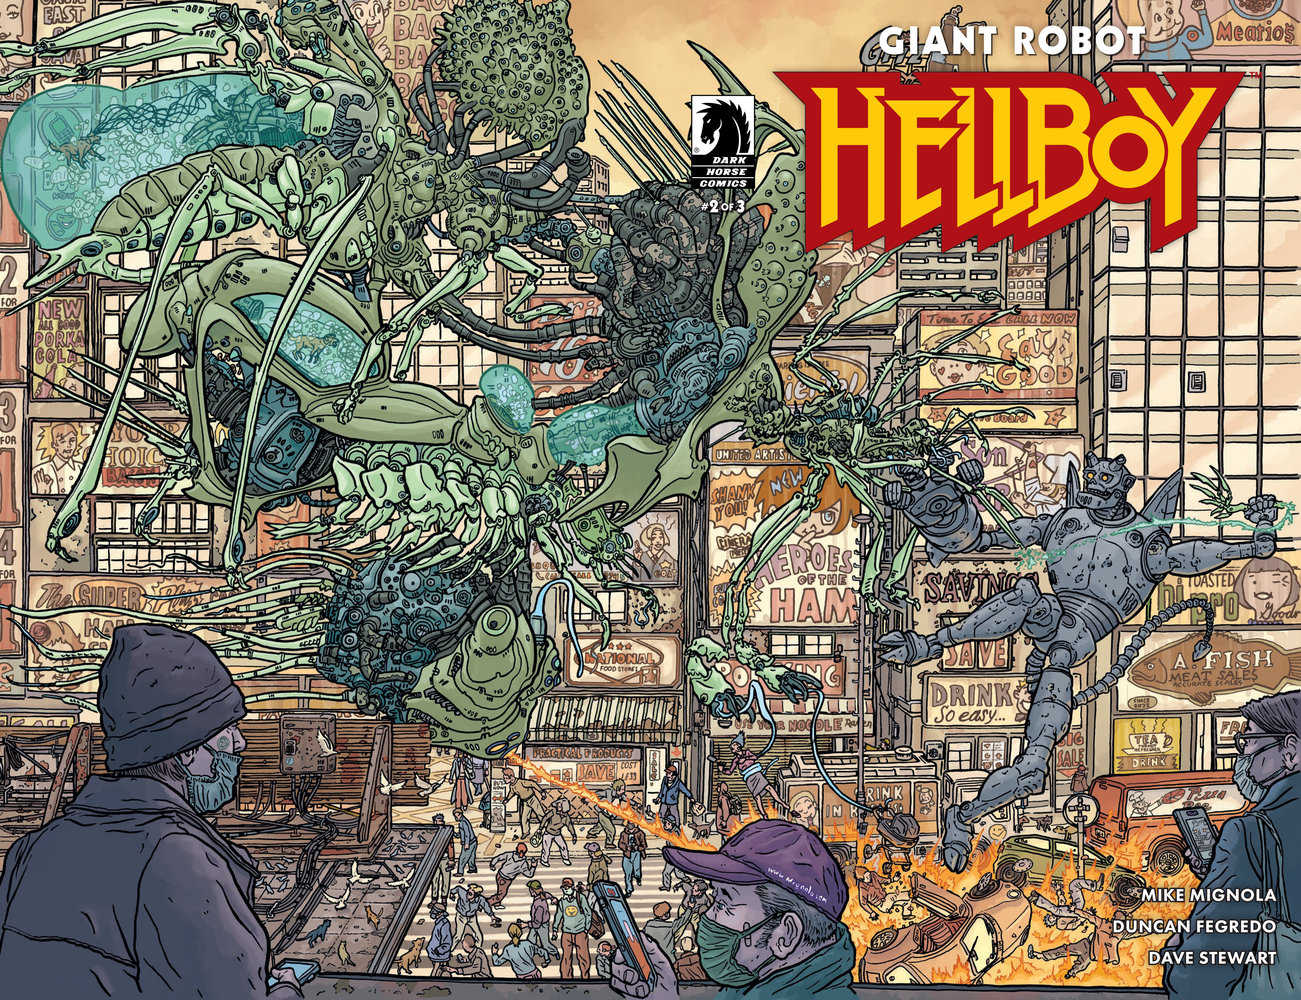 Giant Robot Hellboy #2 (Cover B) (Wraparound) (Geof Darrow)